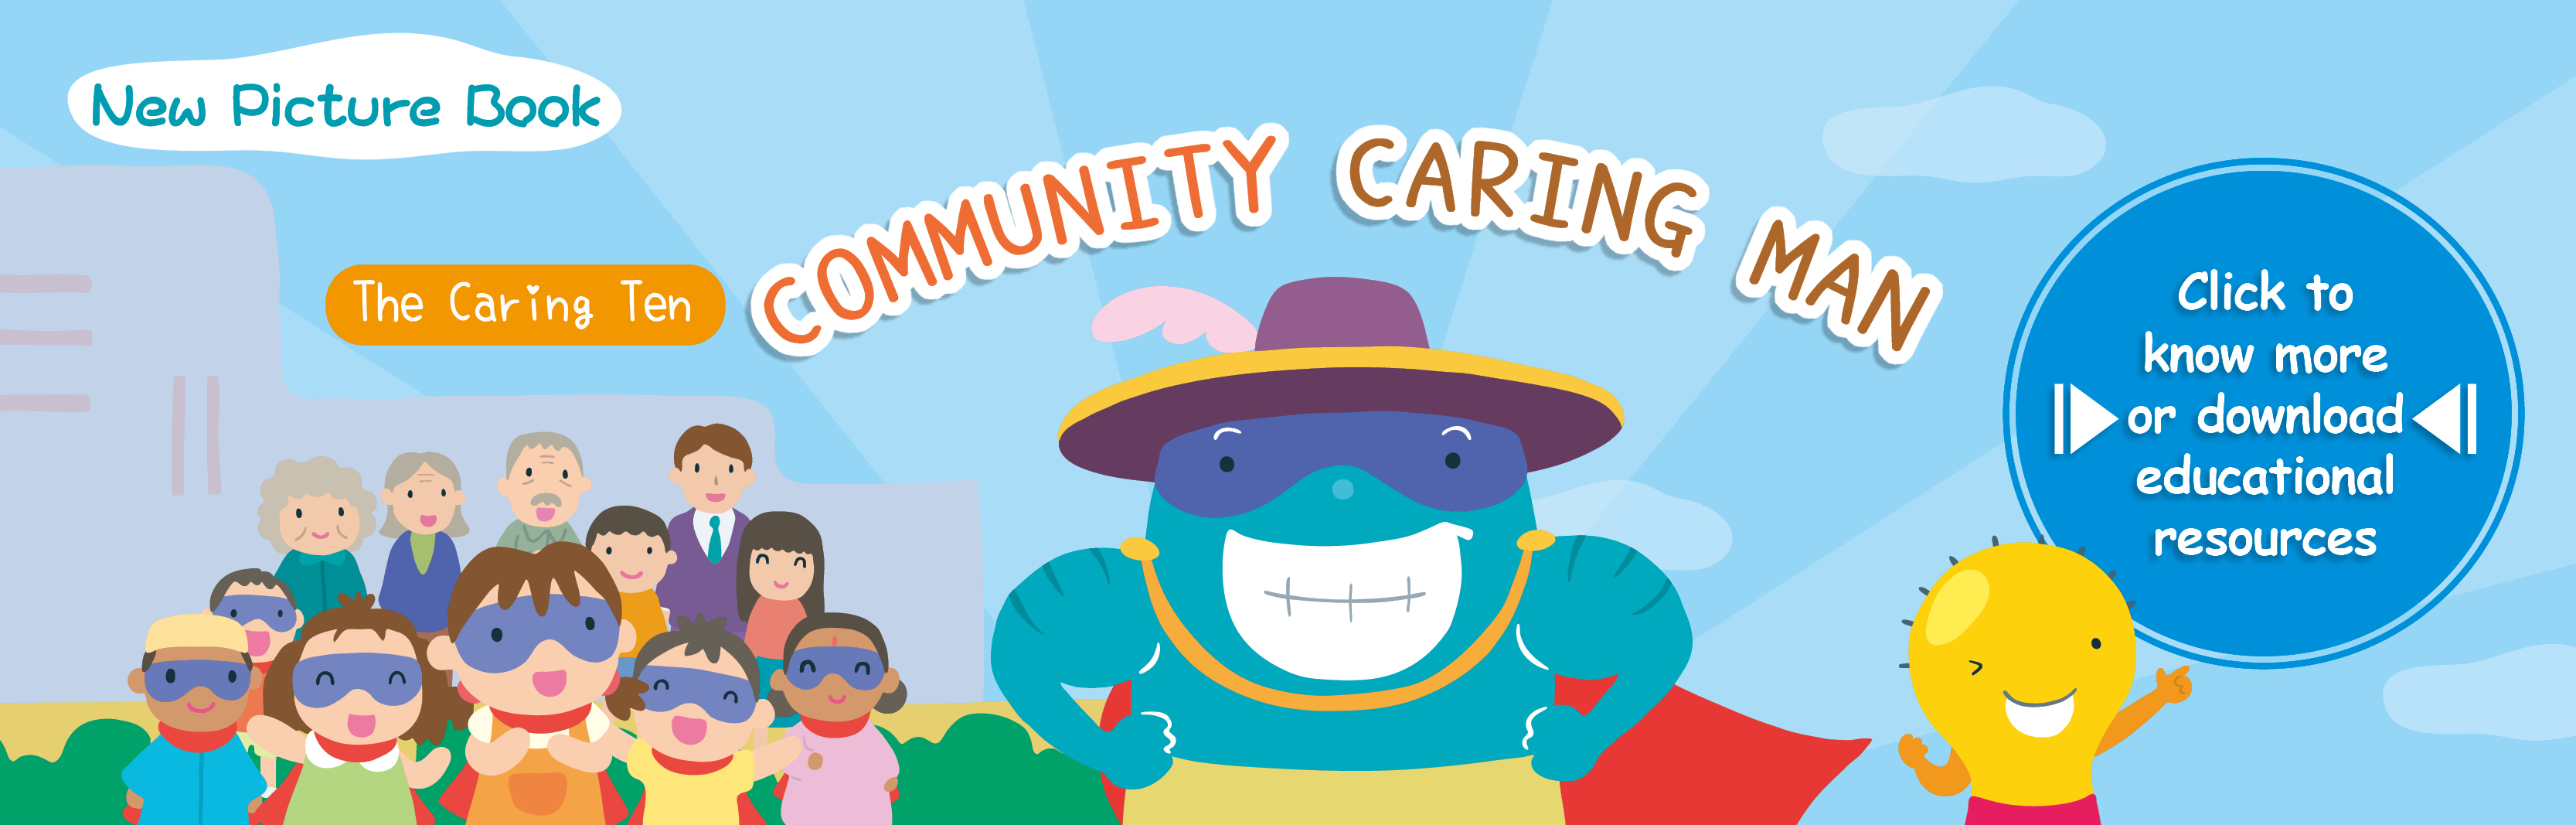 The Caring Ten: Community Caring Man